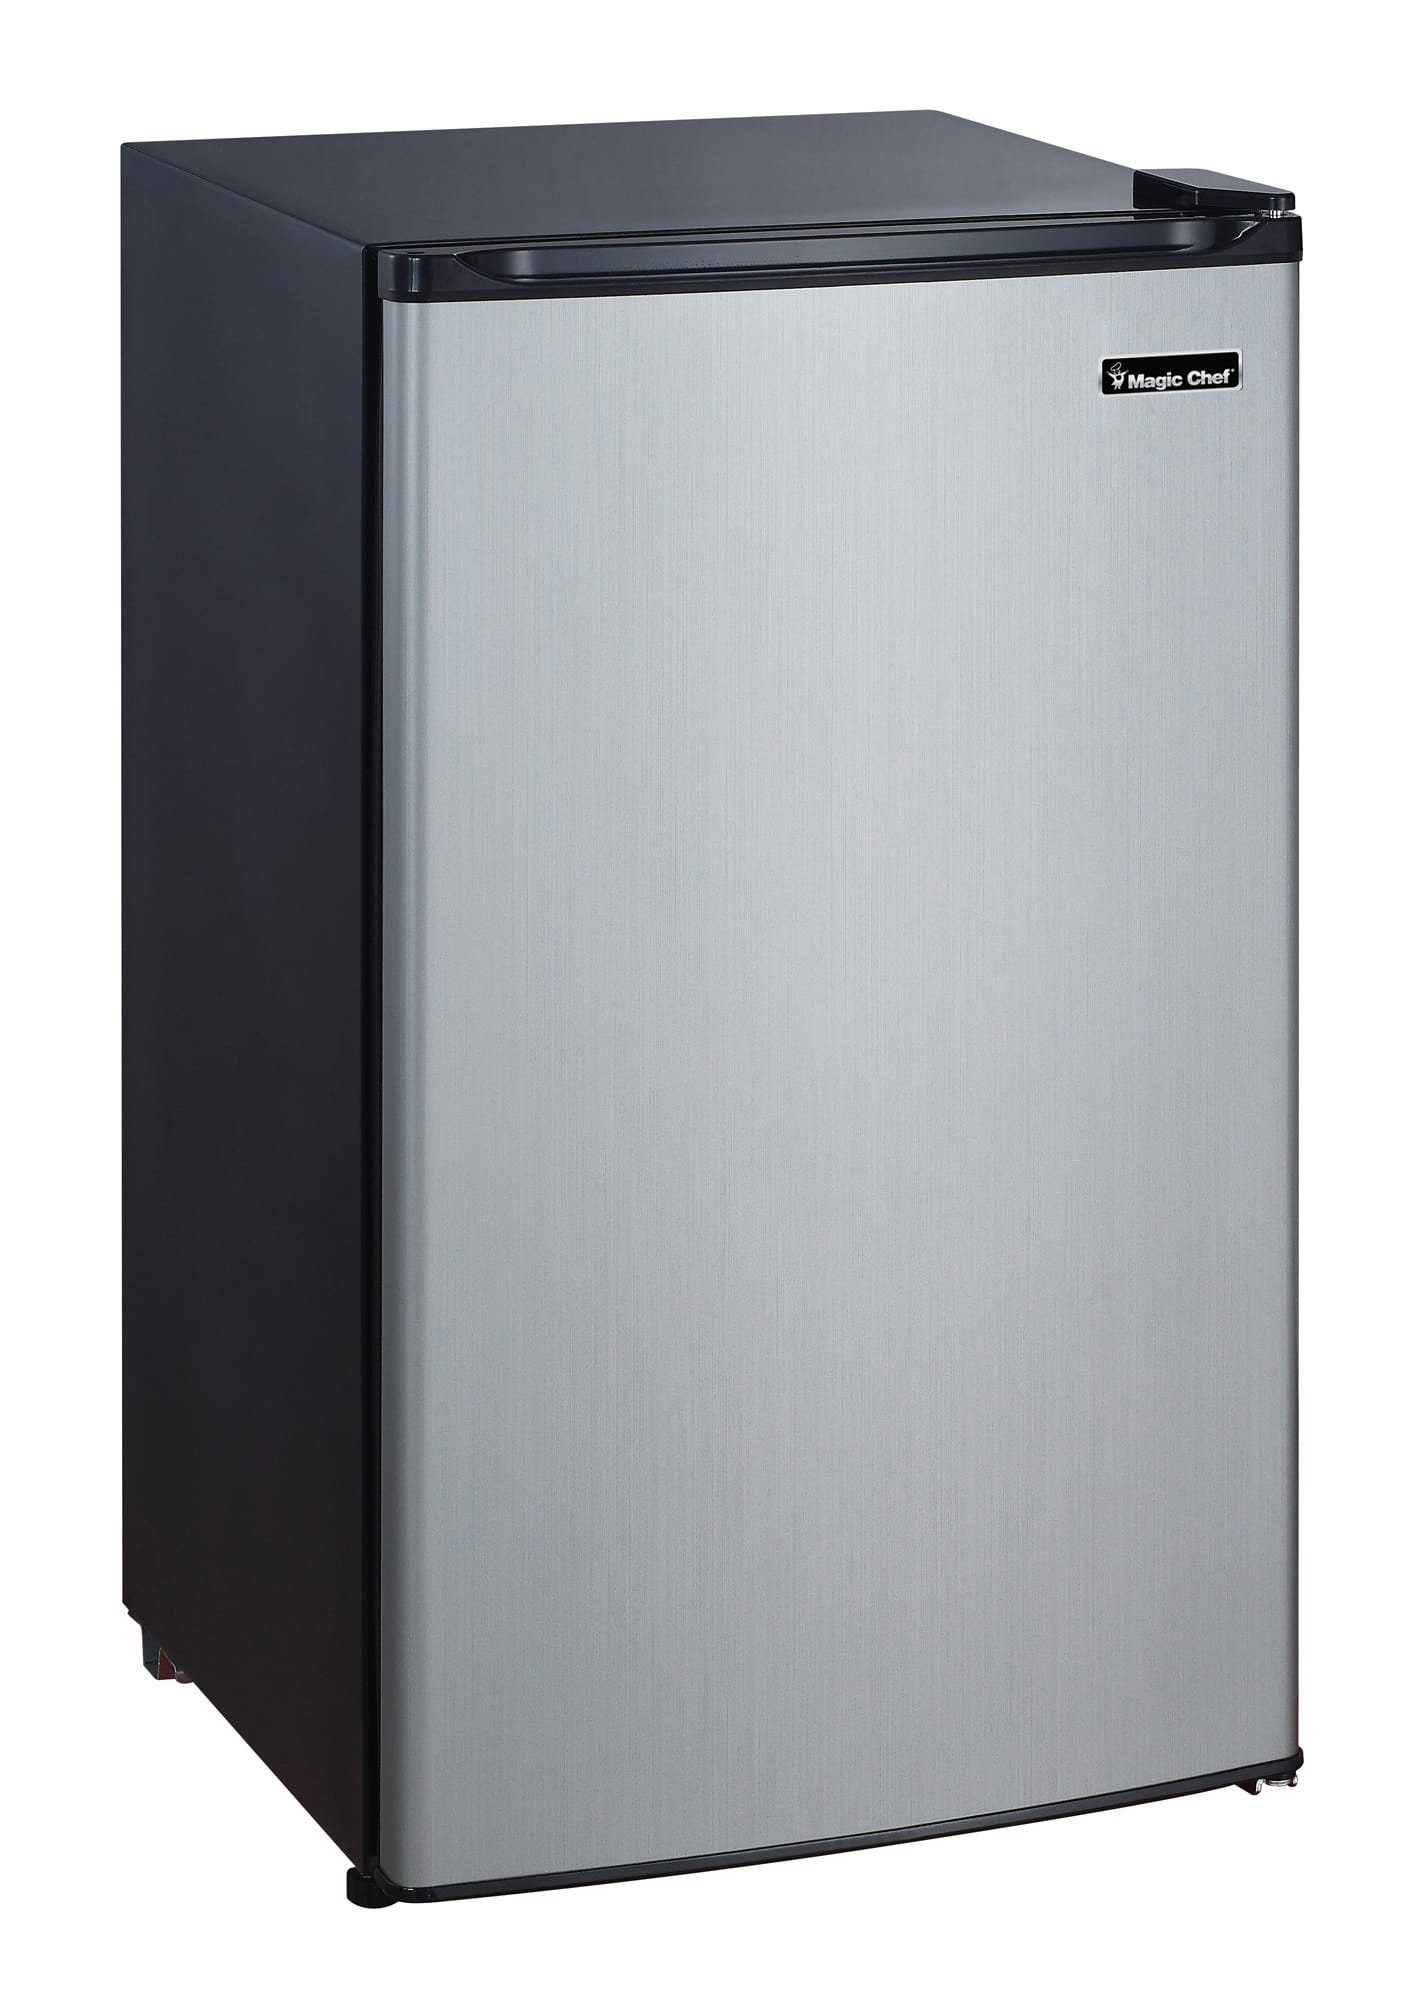 Magic Chef MCAR320PSE Refrigerator Review - Consumer Reports